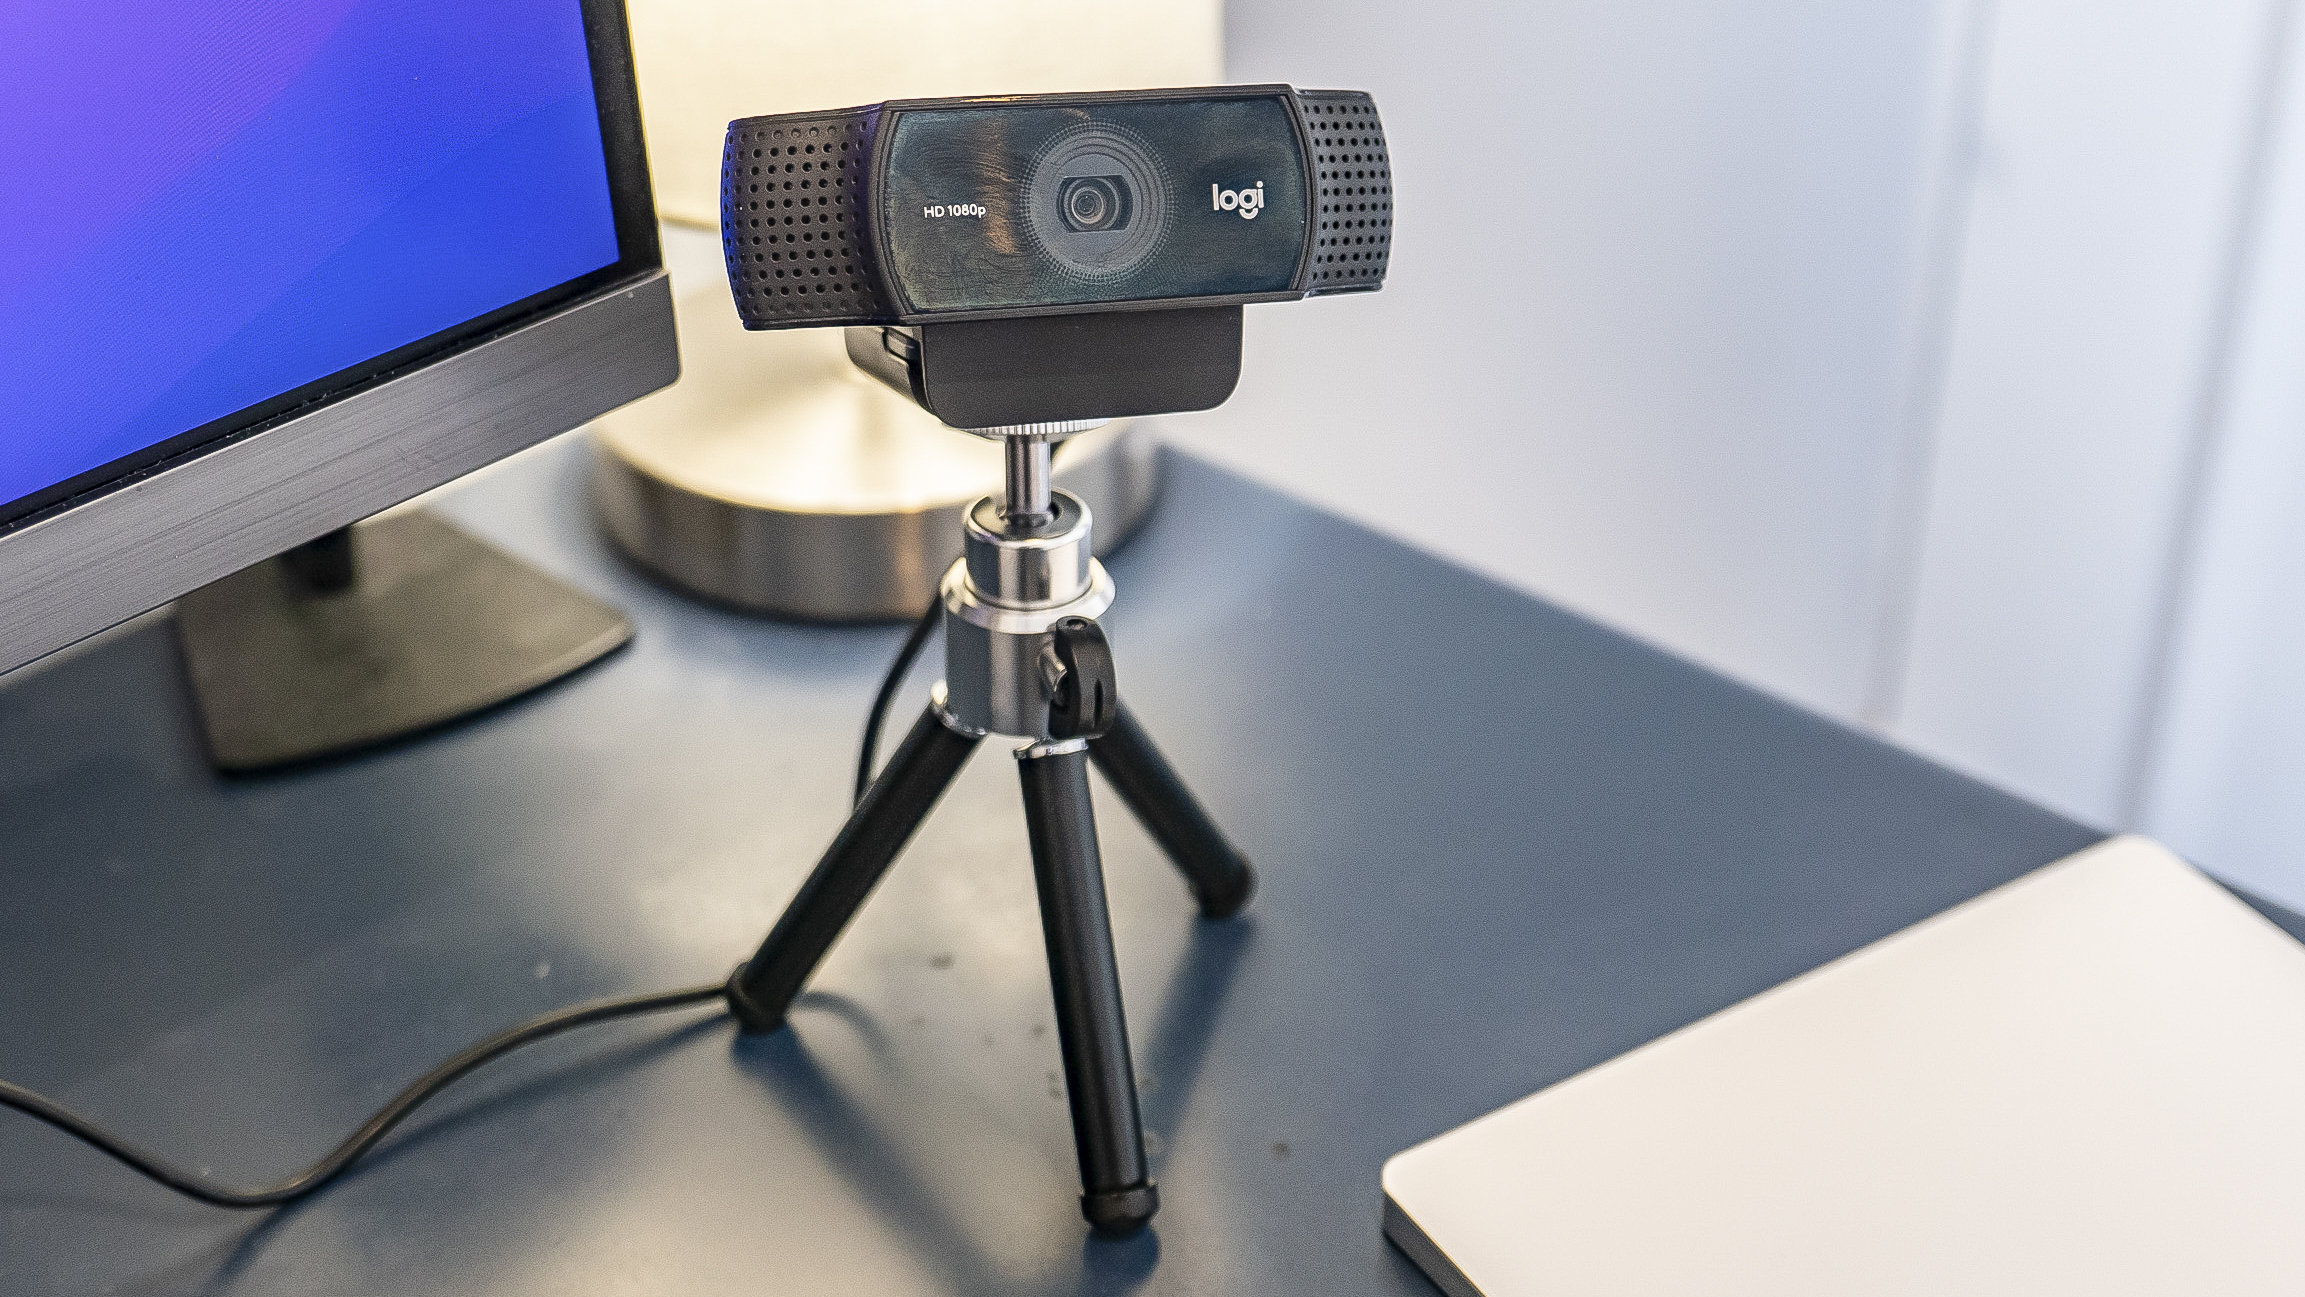 Logitech C922 Pro HD Stream webcam review